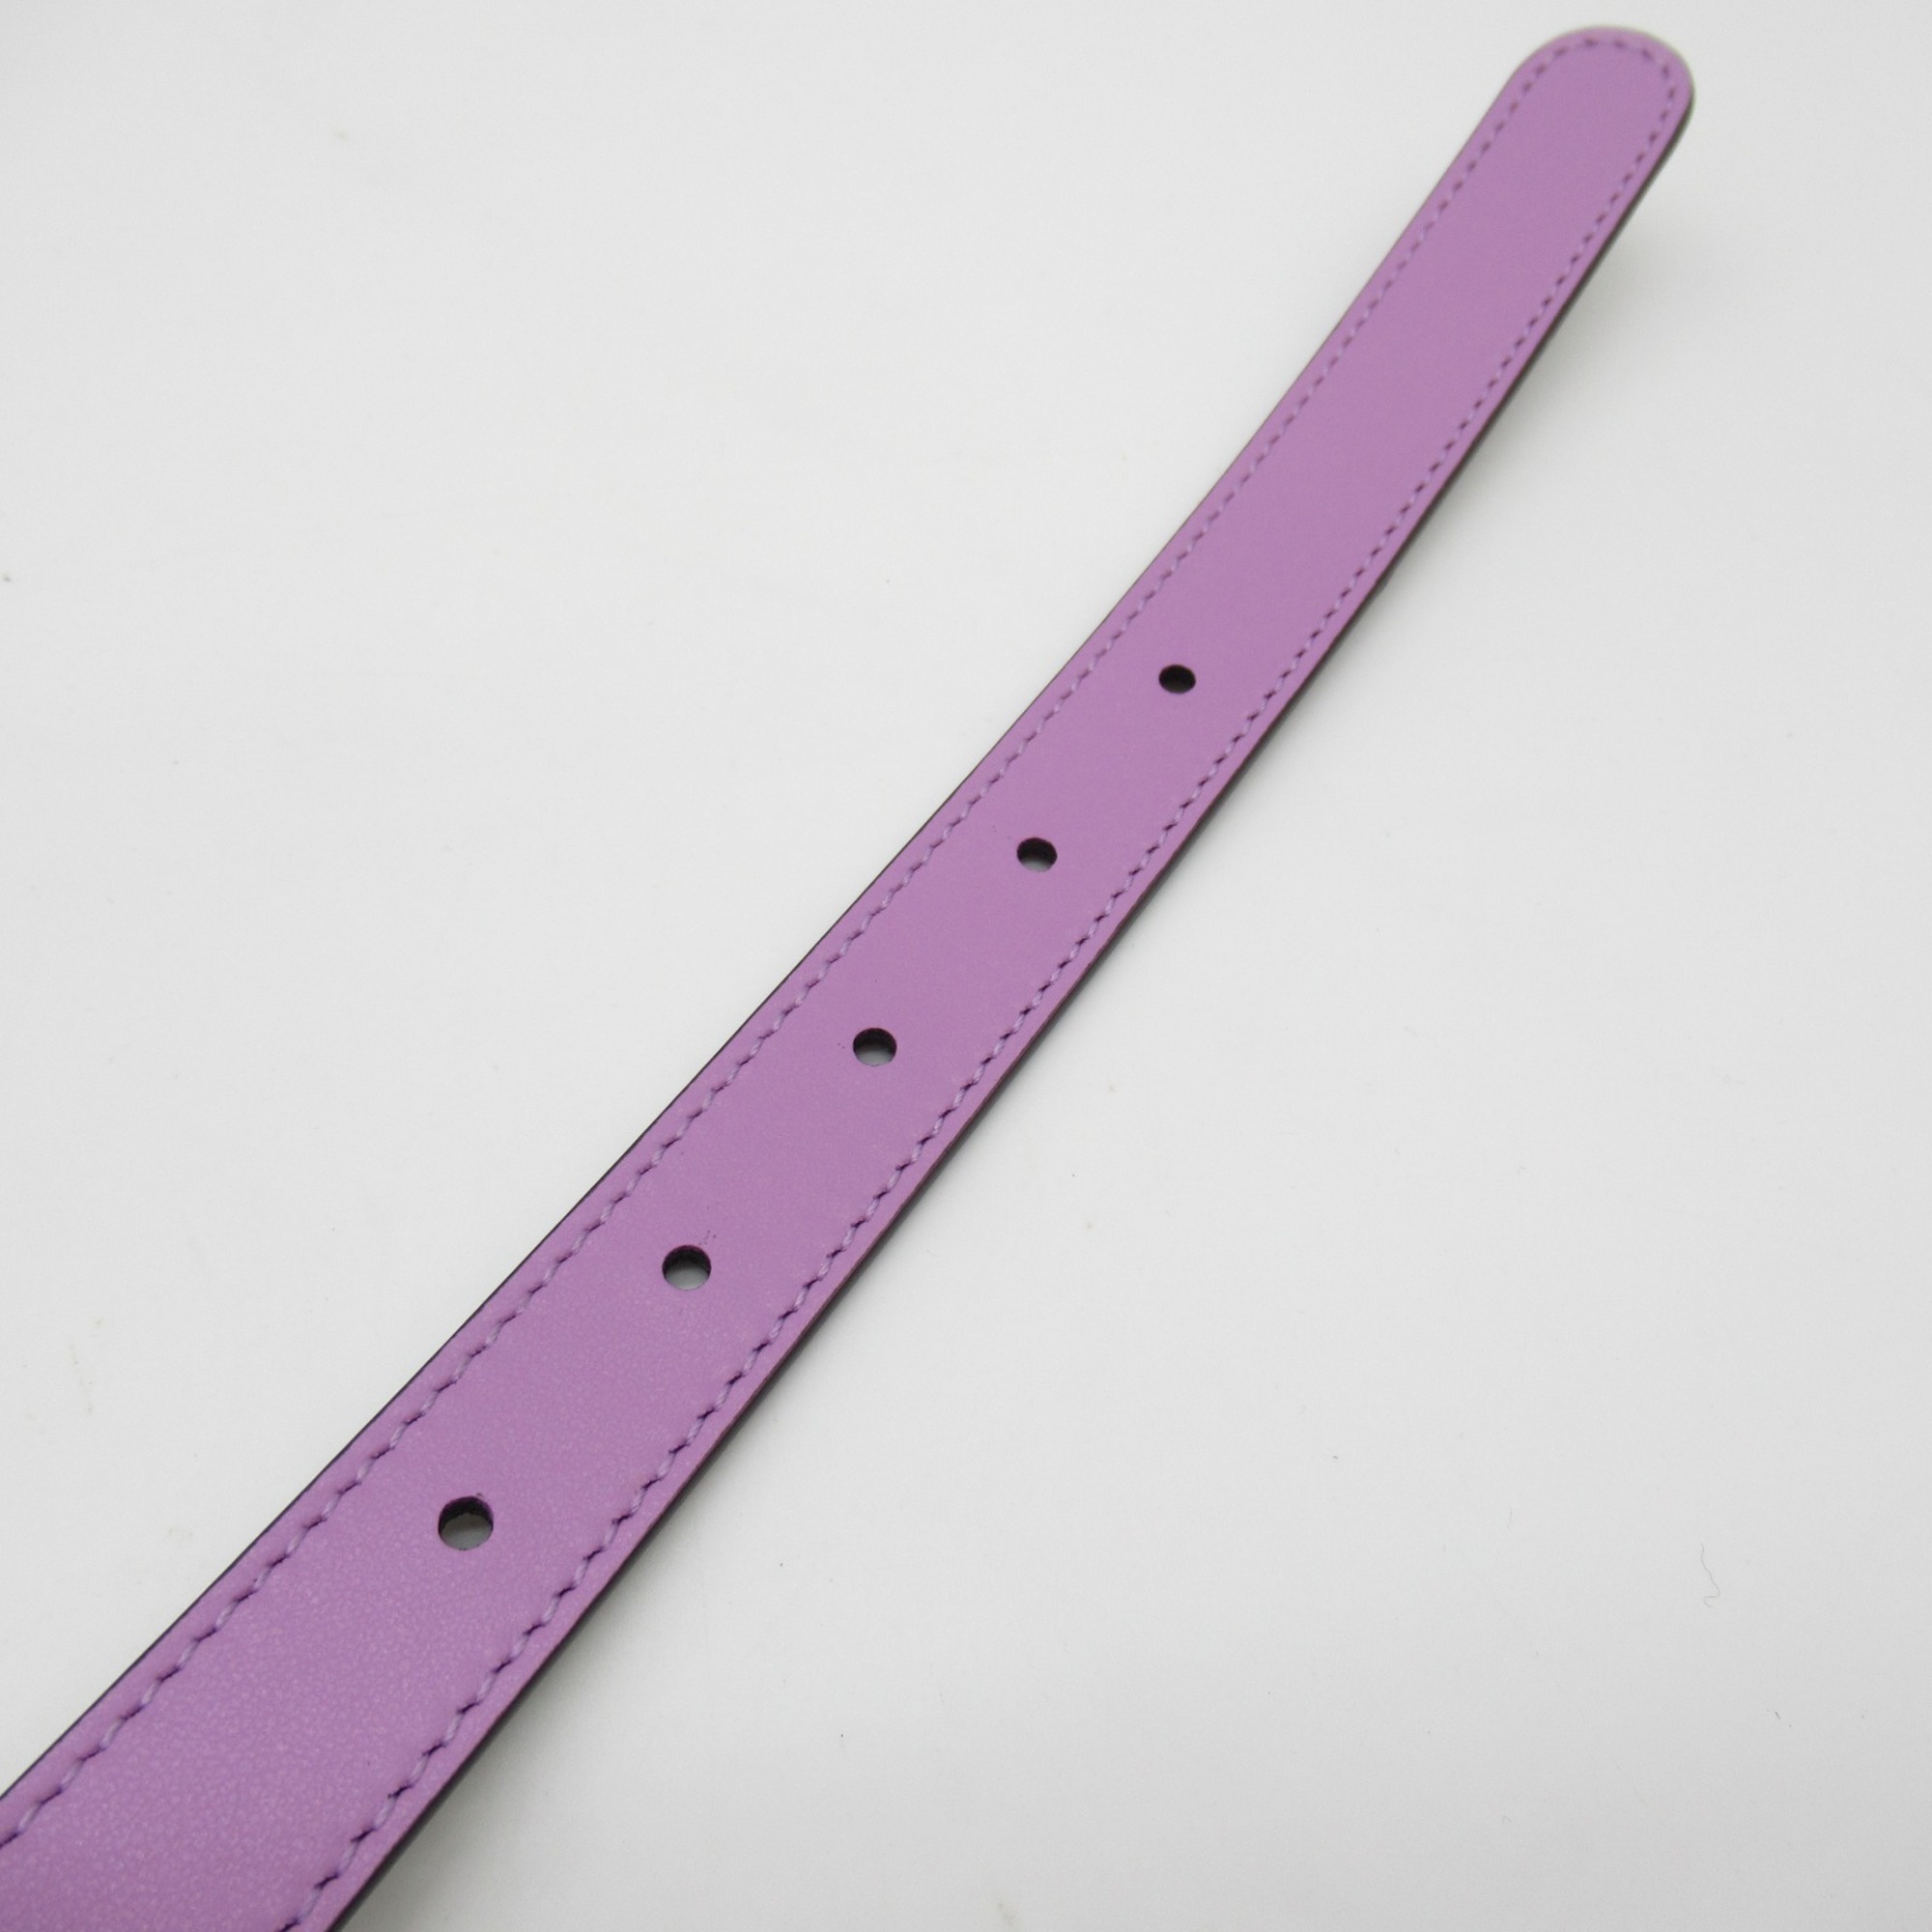 GUCCI GG Marmont reversible belt Beige Purple GG Supreme Canvas 65941892TIC976385